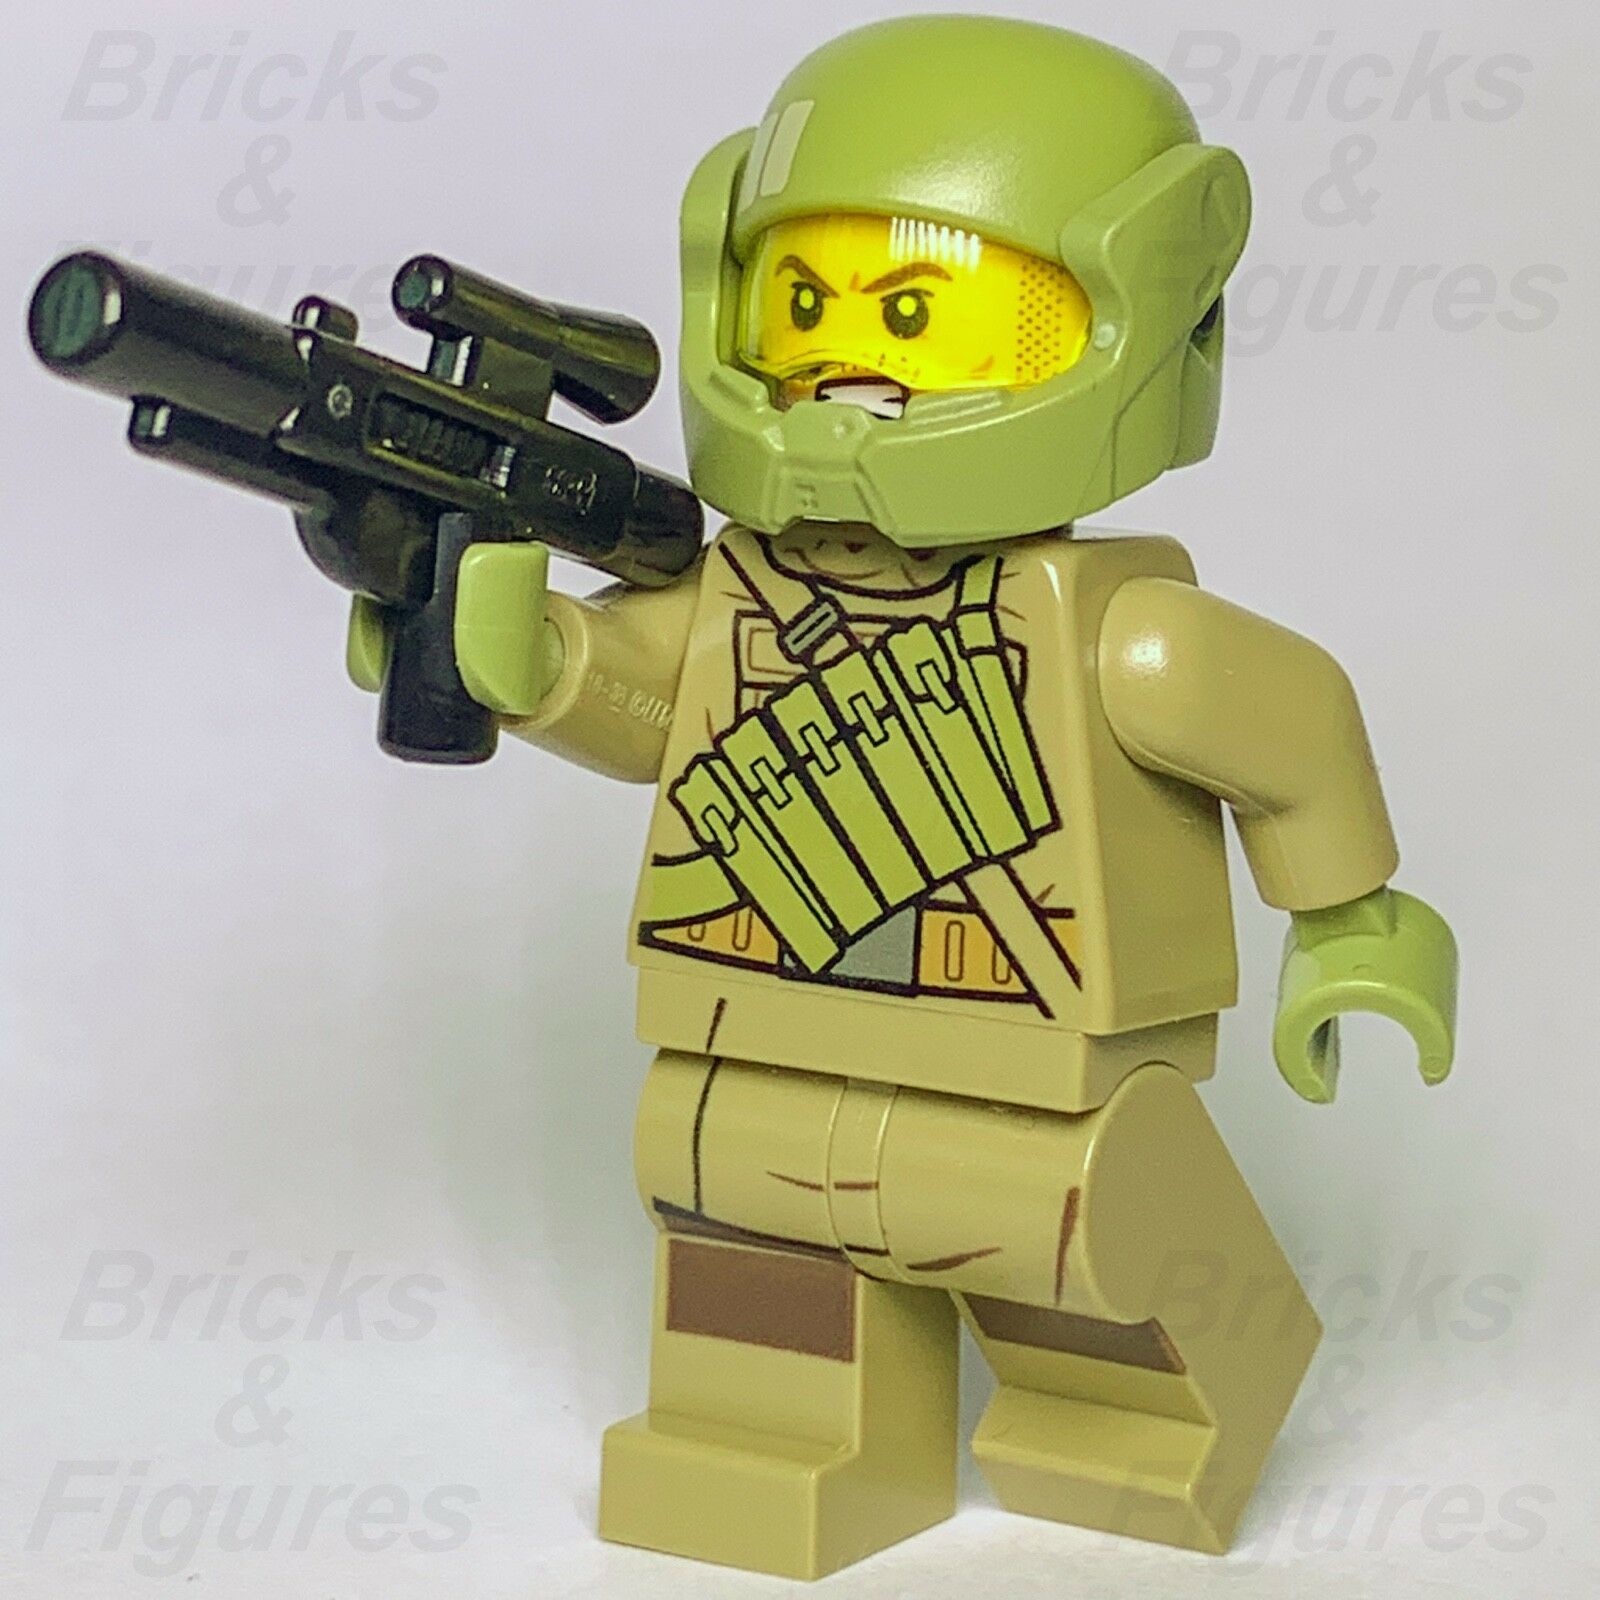 New Star Wars LEGO Resistance Trooper Fighter The Last Jedi Minifigure 75202 - Bricks & Figures